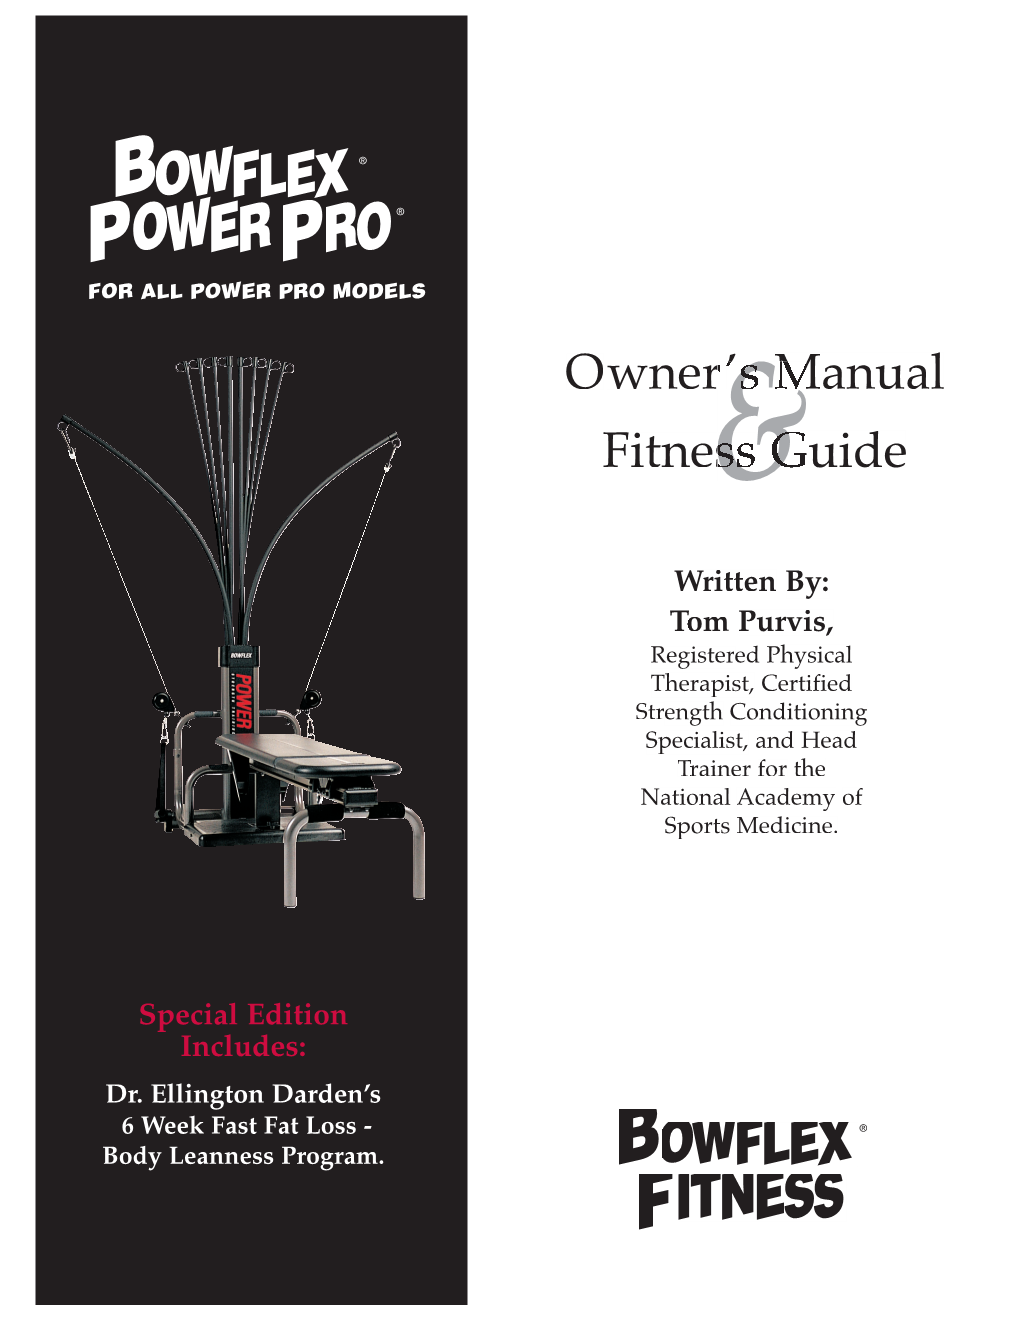 THE BOWFLEX POWER PRO 2 Using Your Machine